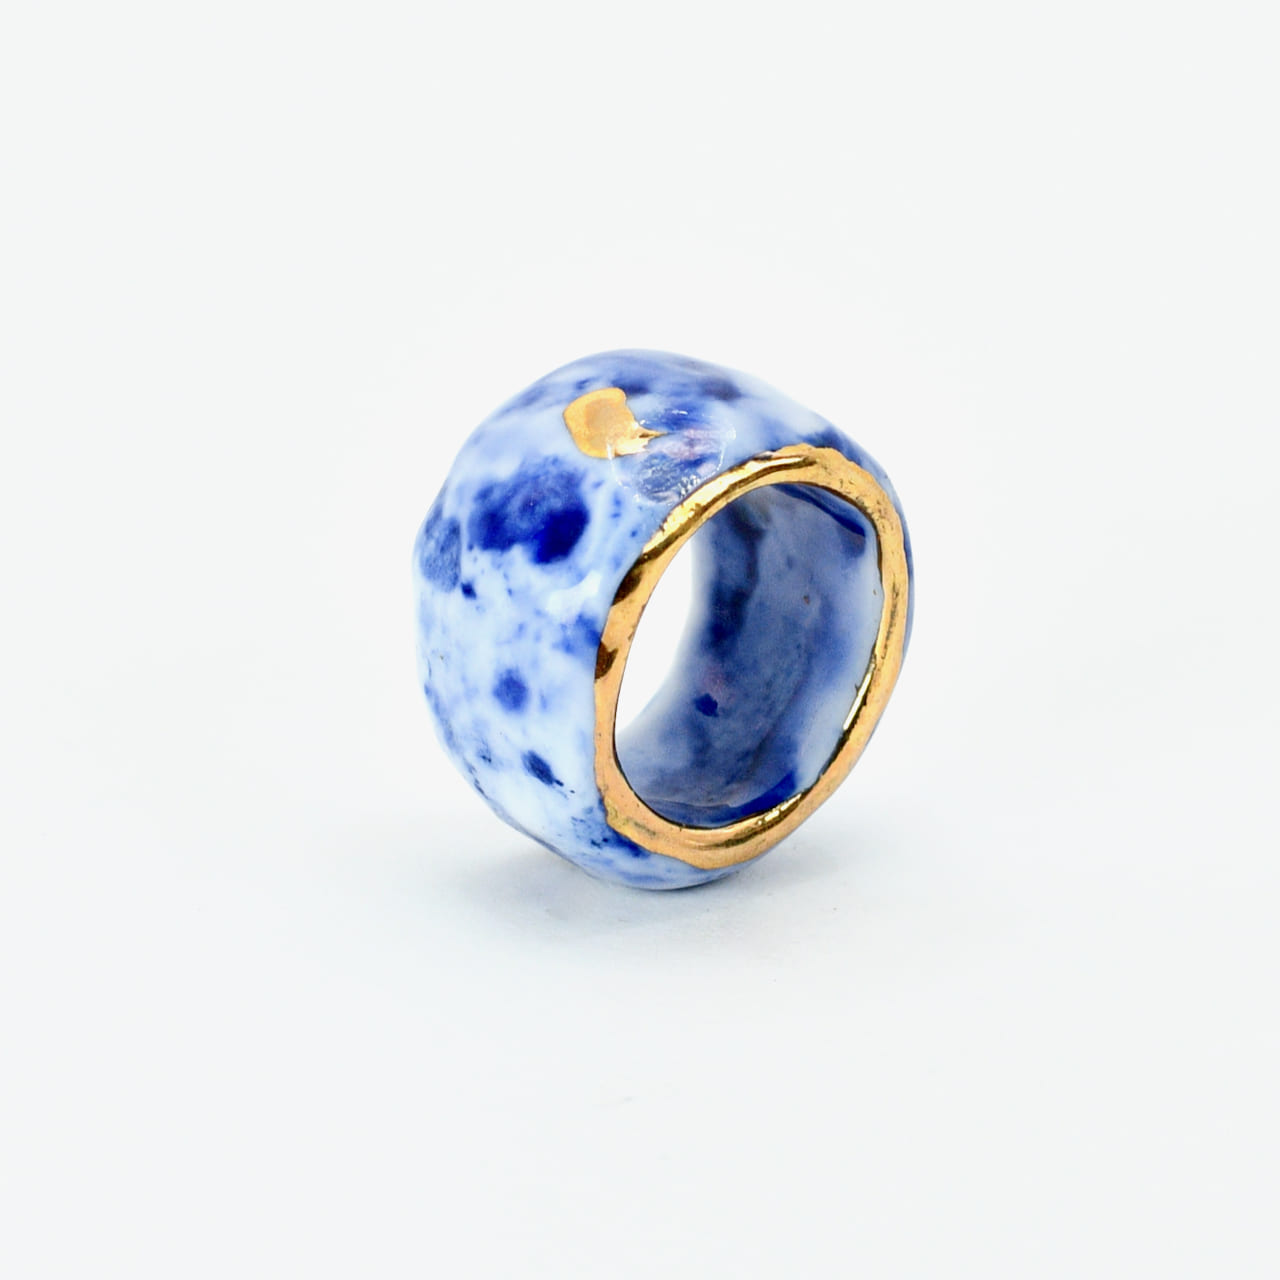 OIA Porcelain Ceramic Ring